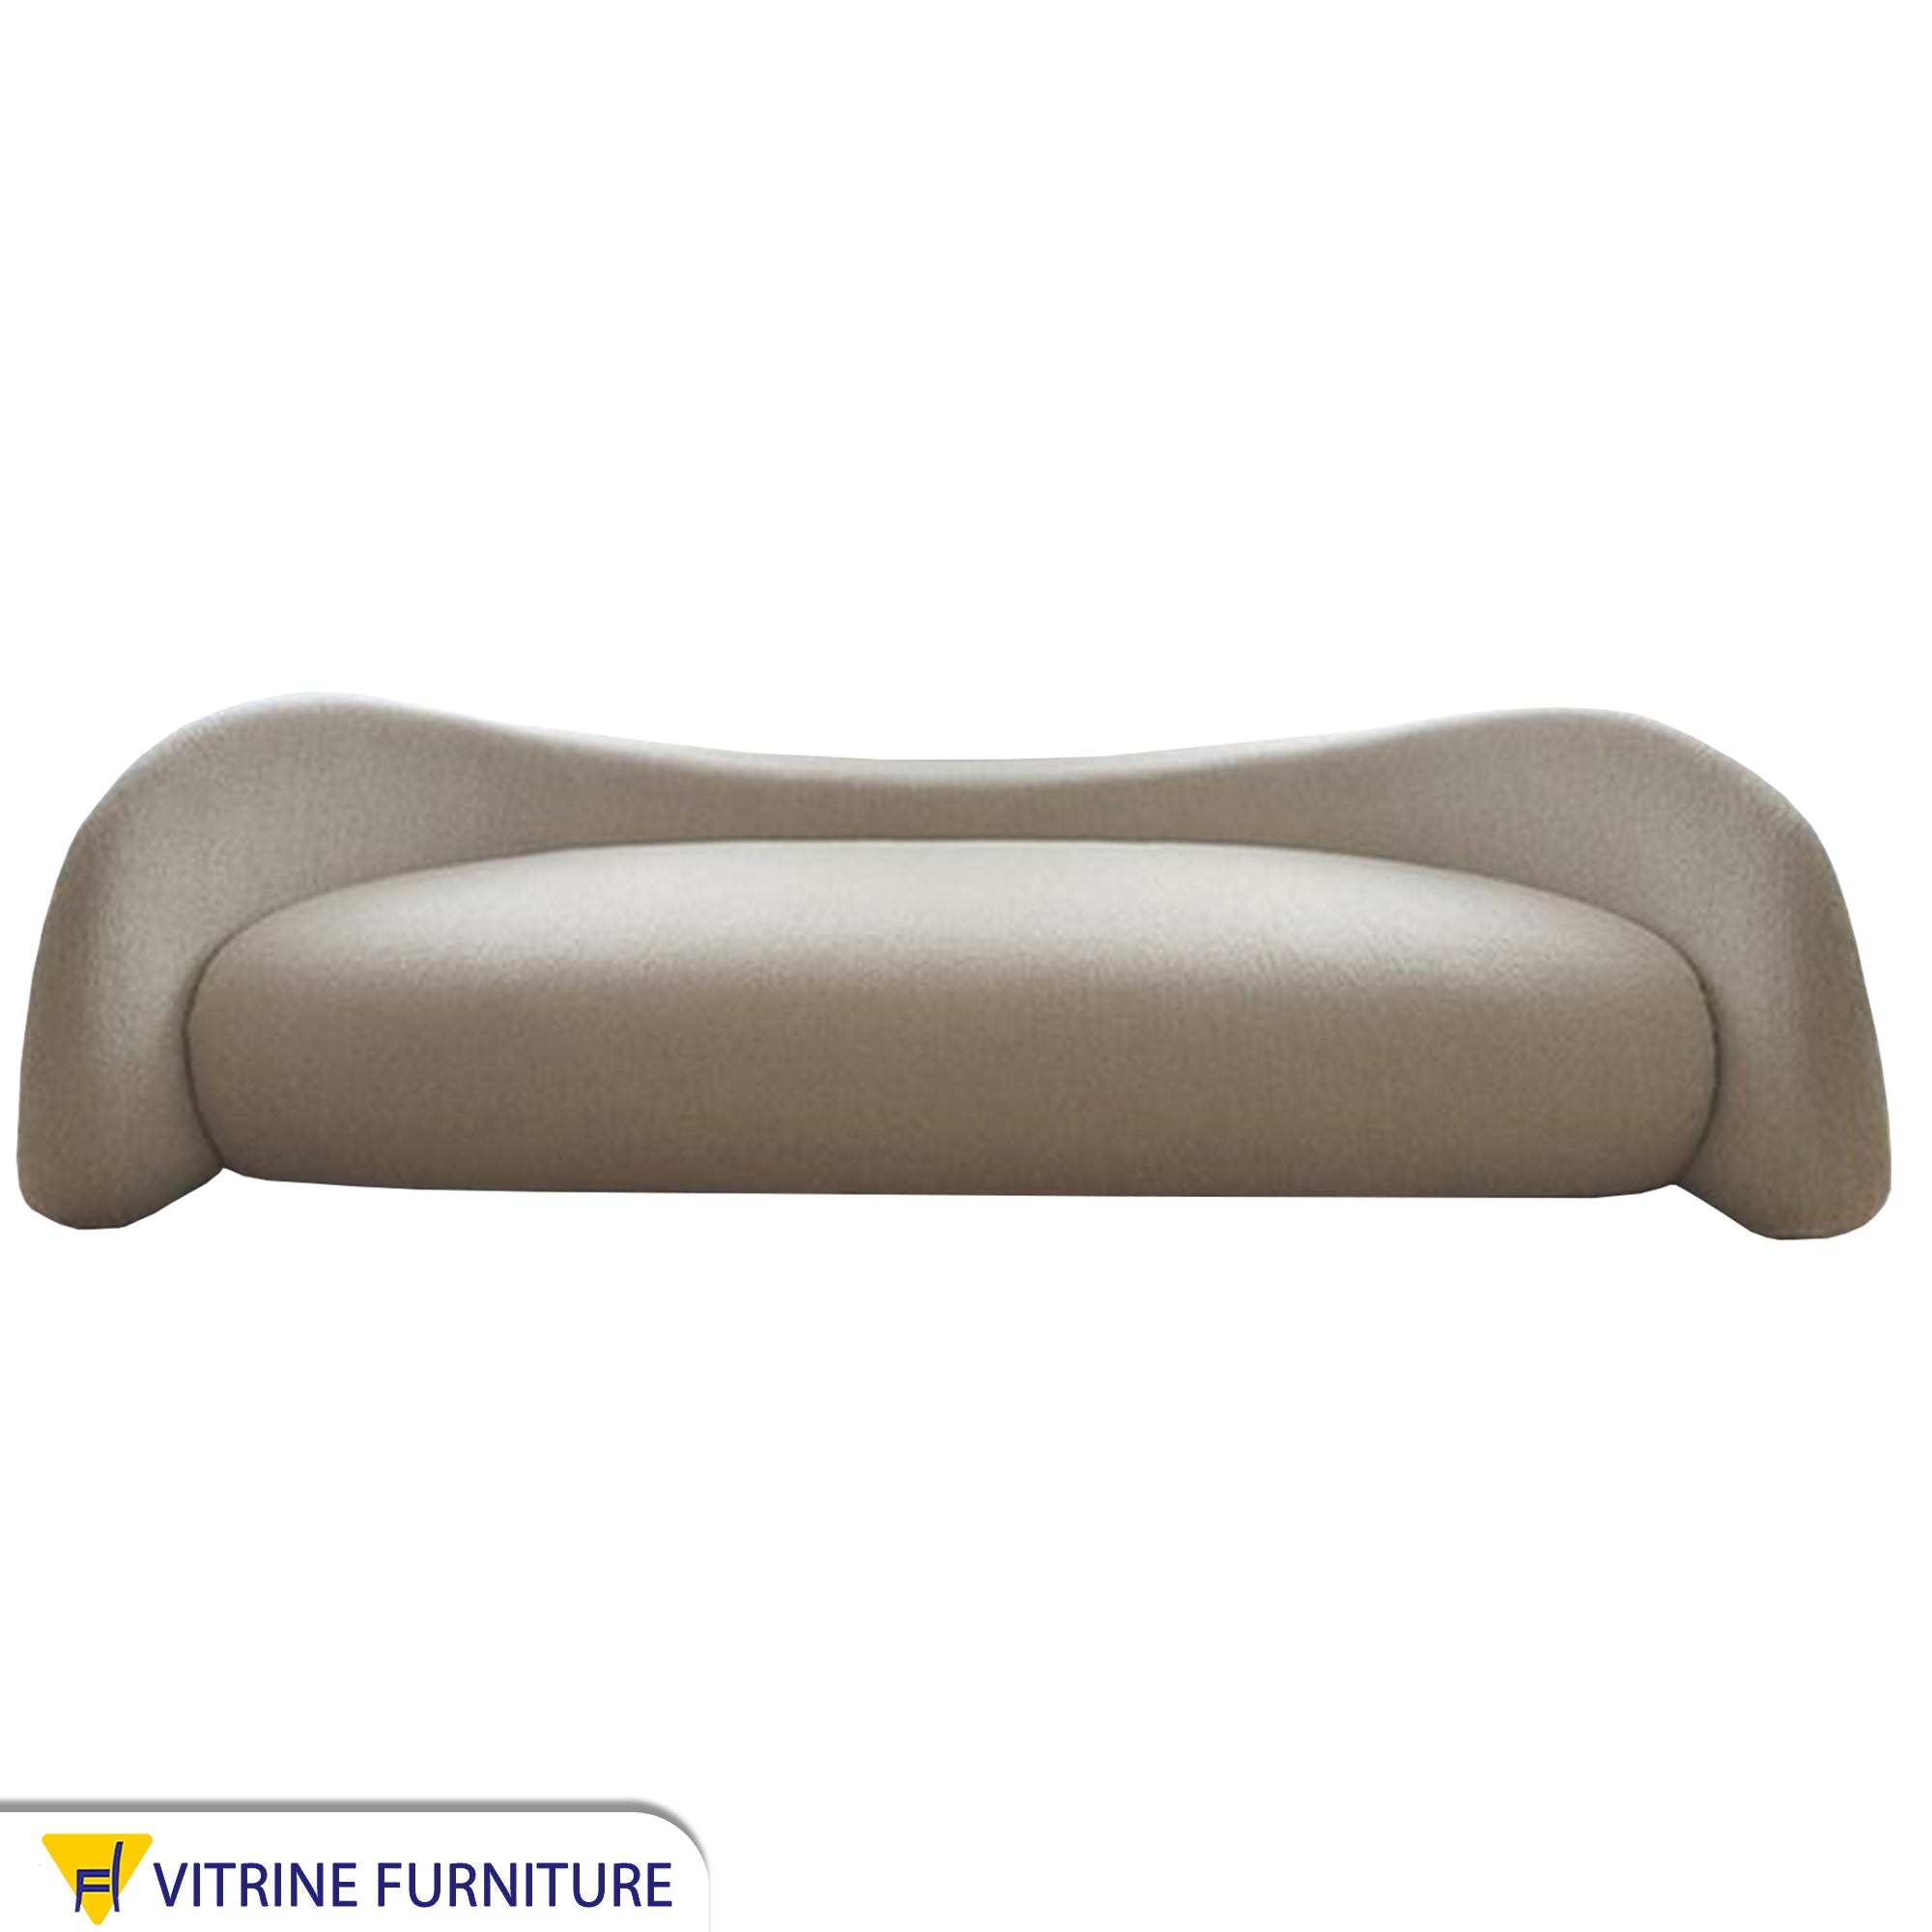 Off white sofa with corrugated backrest